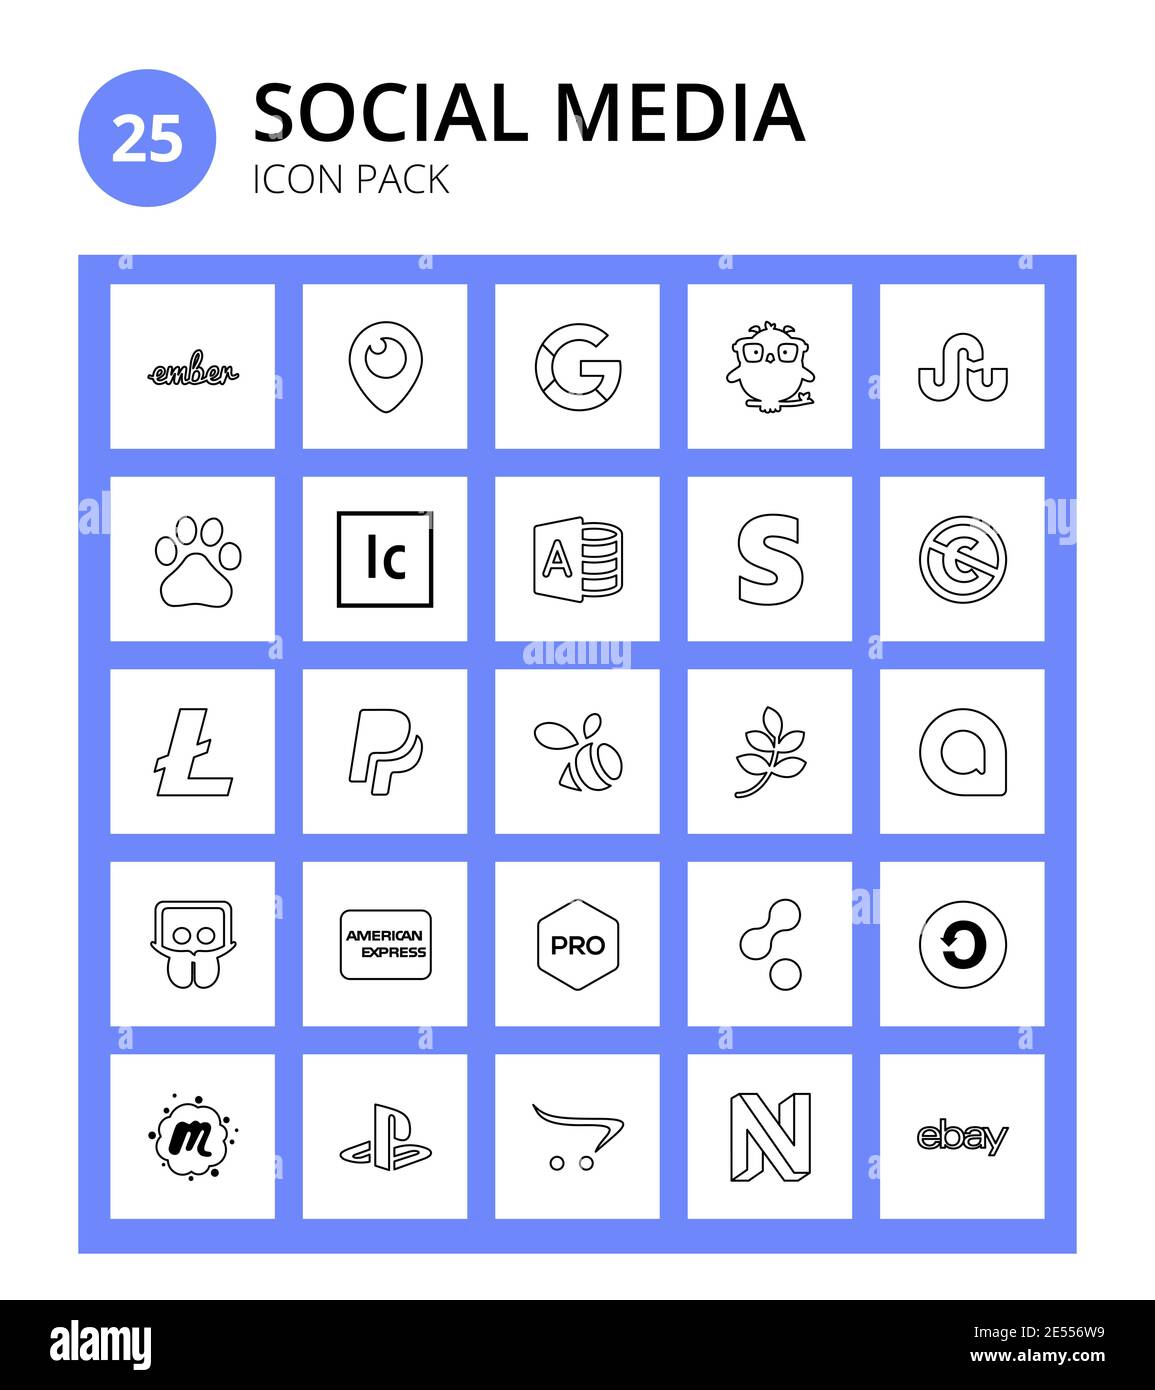 Ensemble de 25 social logo allo, swarm, microsoft Access, paypal, pdd modifiable Vector Design Elements Illustration de Vecteur